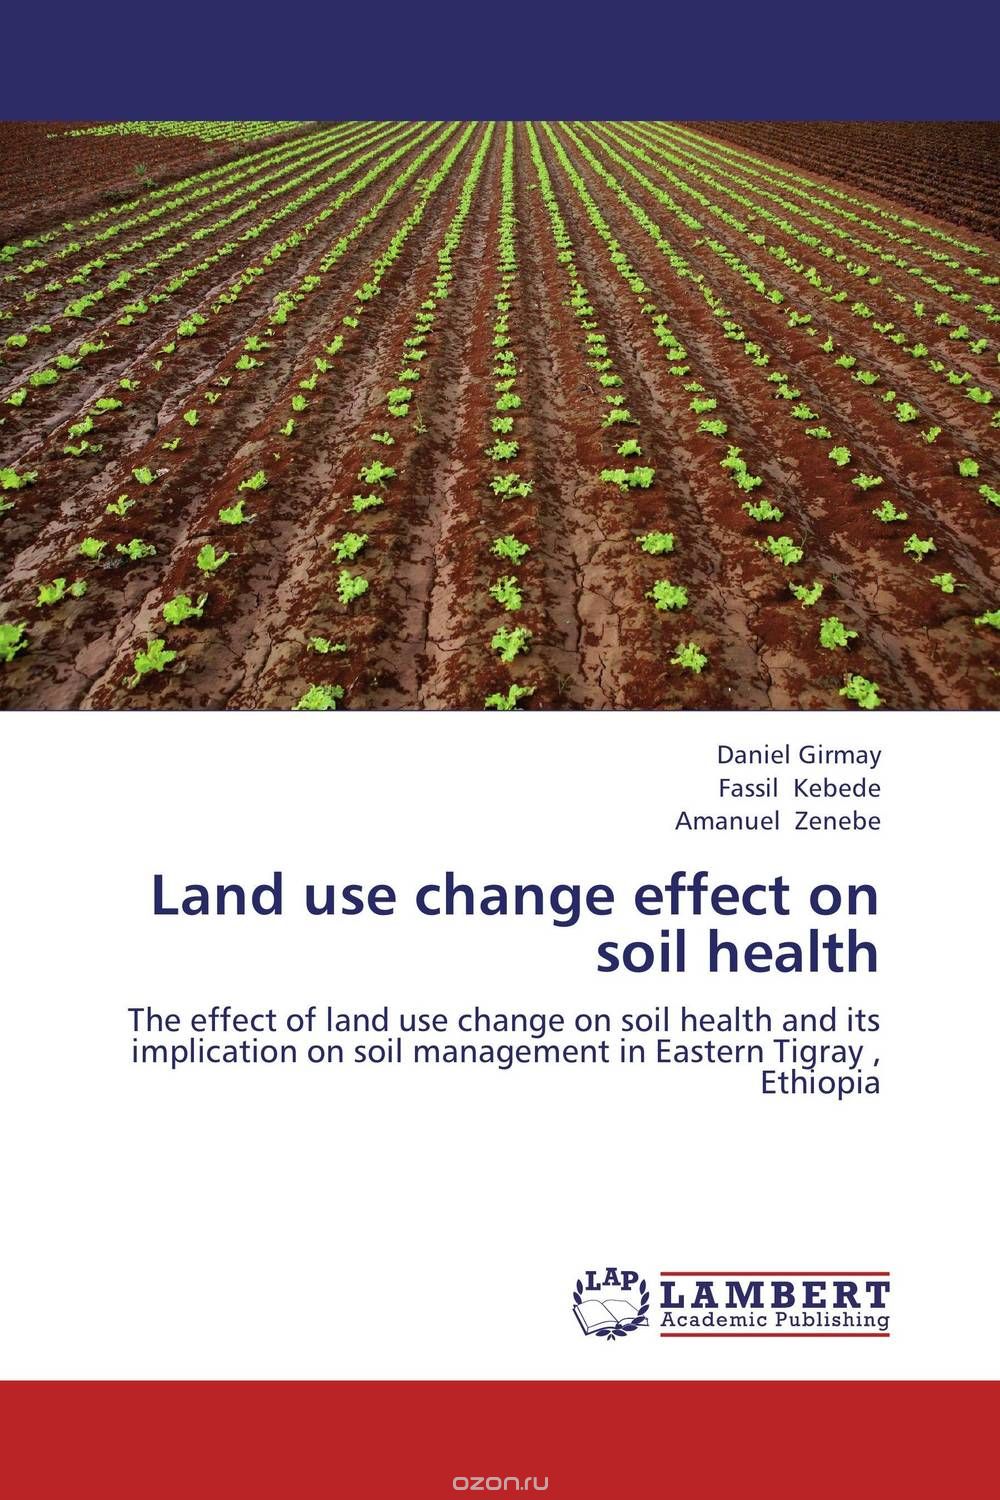 Скачать книгу "Land use change effect on soil health"